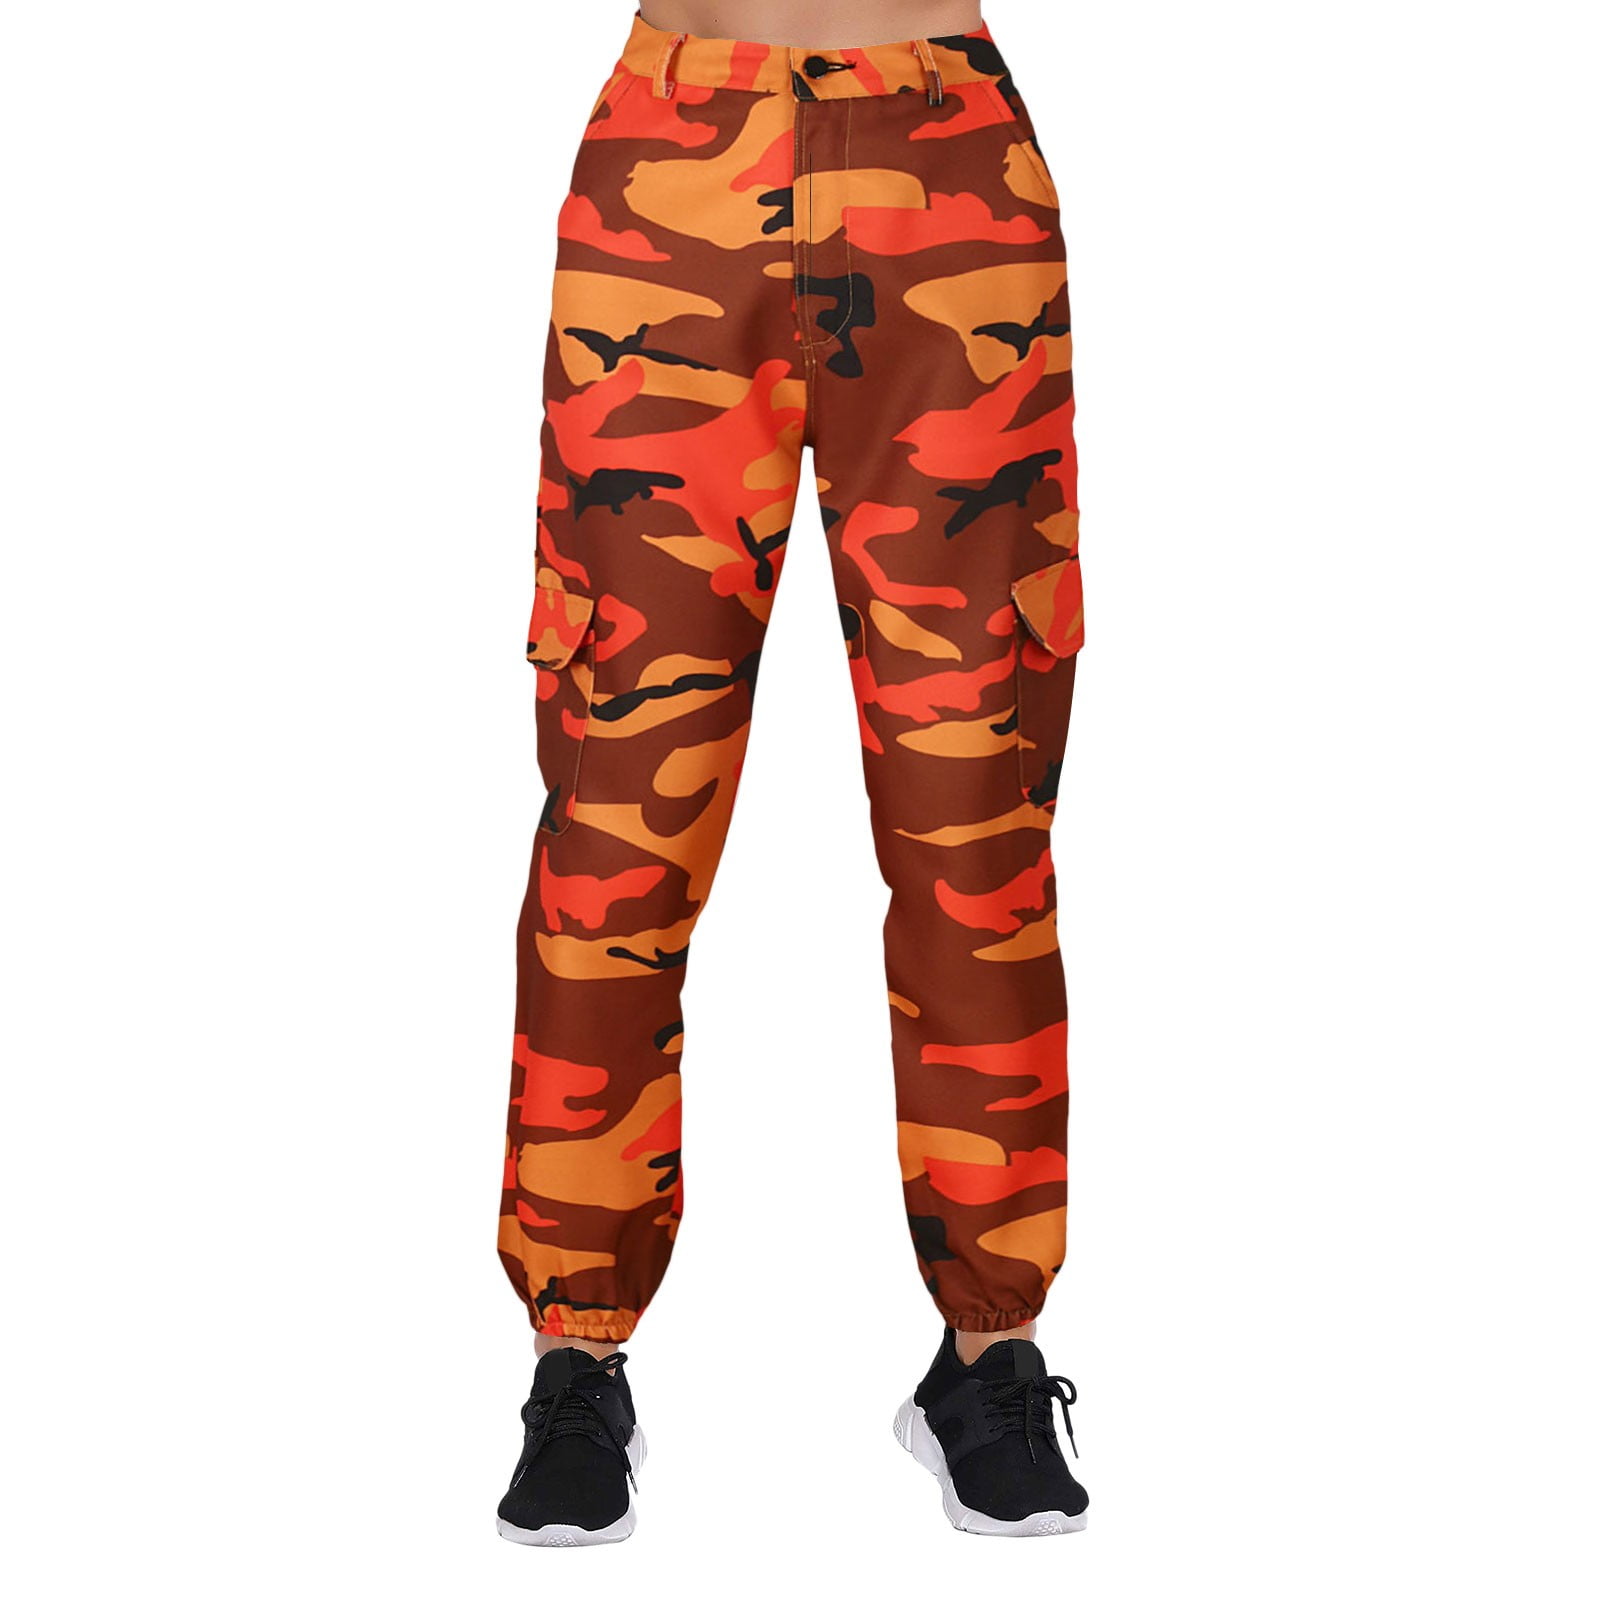 Capri Pants For Women Camo Cargo Camouflage Elastic Waist Casual